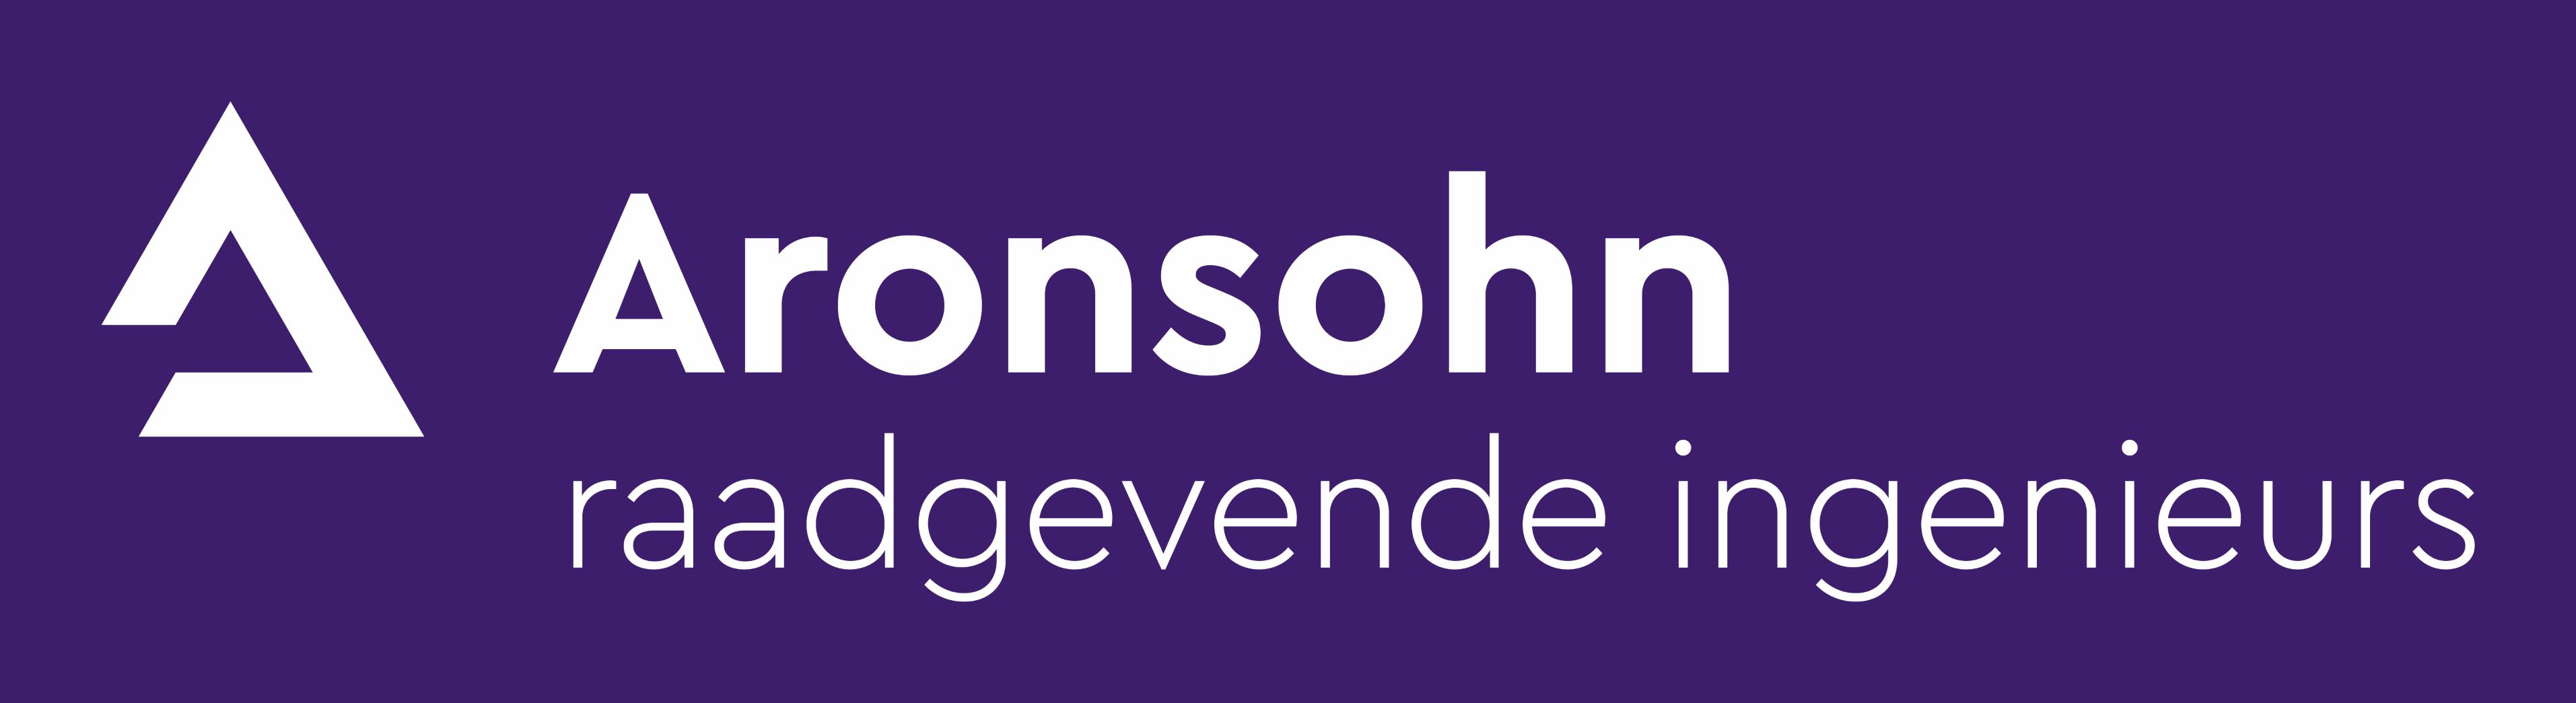 Logo Aronsohn raadgevende ingenieurs